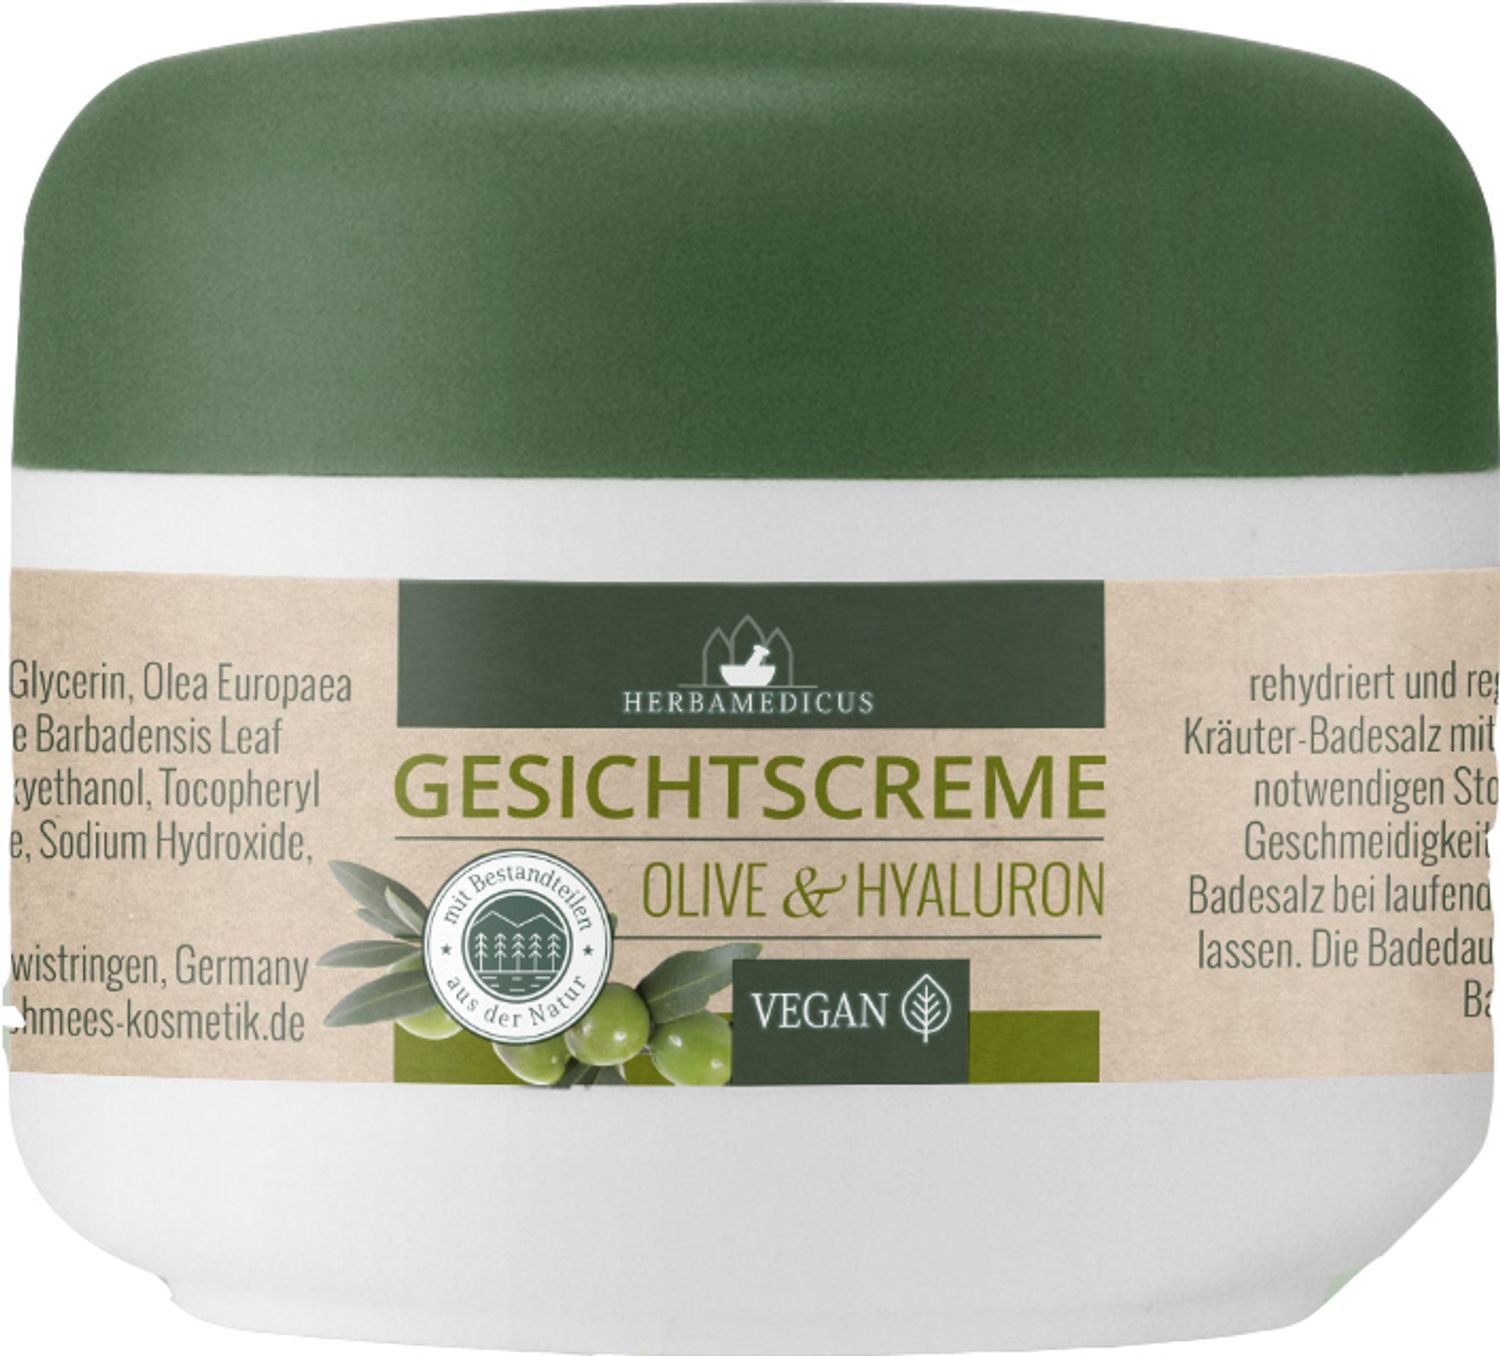 Schmees GmbH Körpercreme 12x Herbamedicus Gesichtscreme 50ml Olive Hyaluron Tagespflege Nacht, 12-tlg.